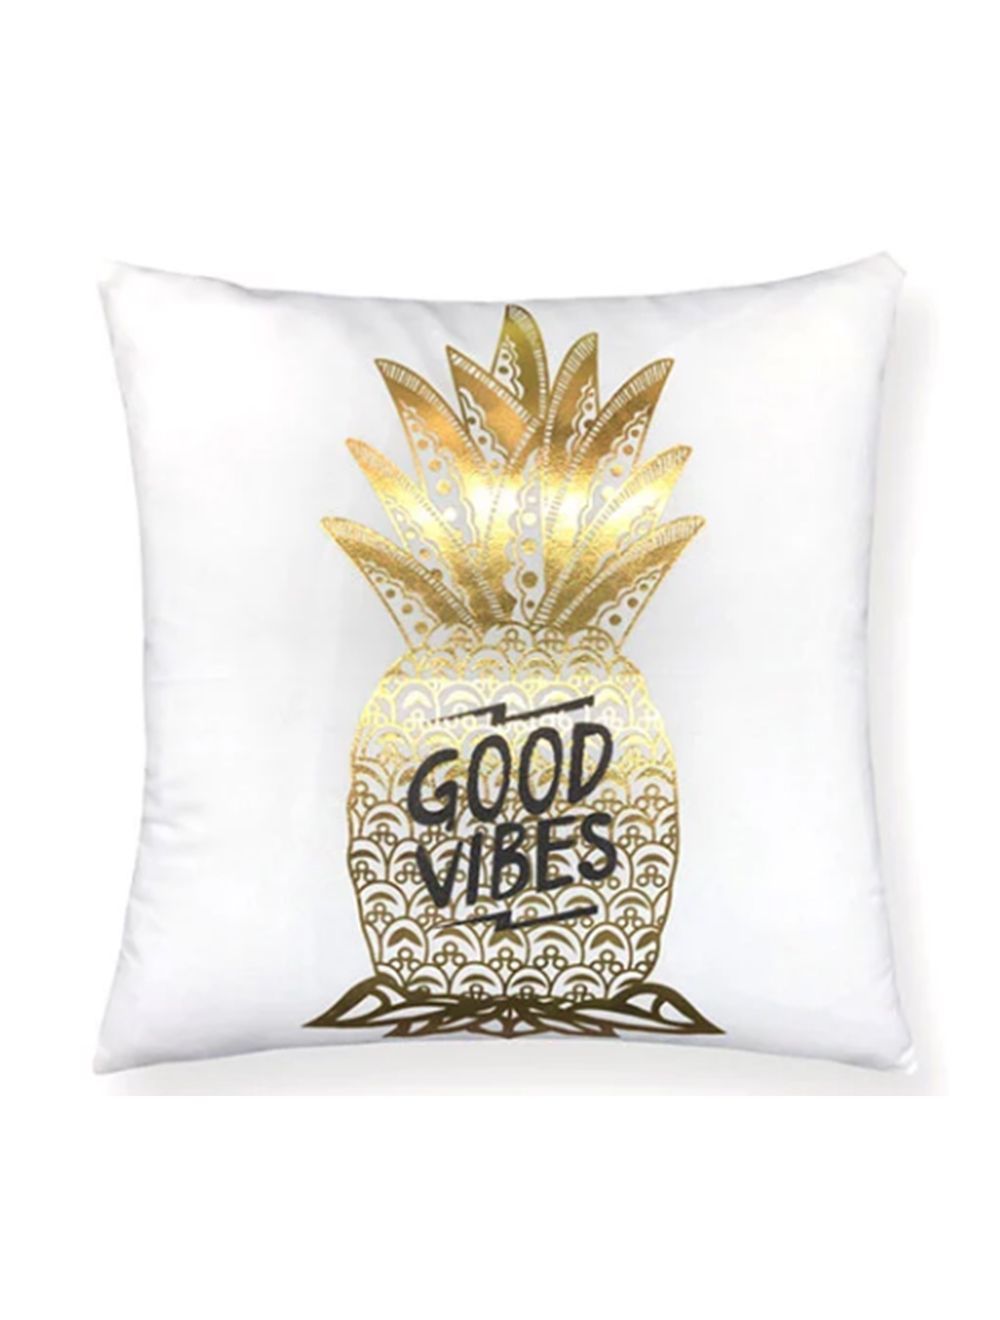 Rishahome Good Vibes on Golden Pineapple Metallic Printed Cushion Cover 45x45 cm-9C74I0006